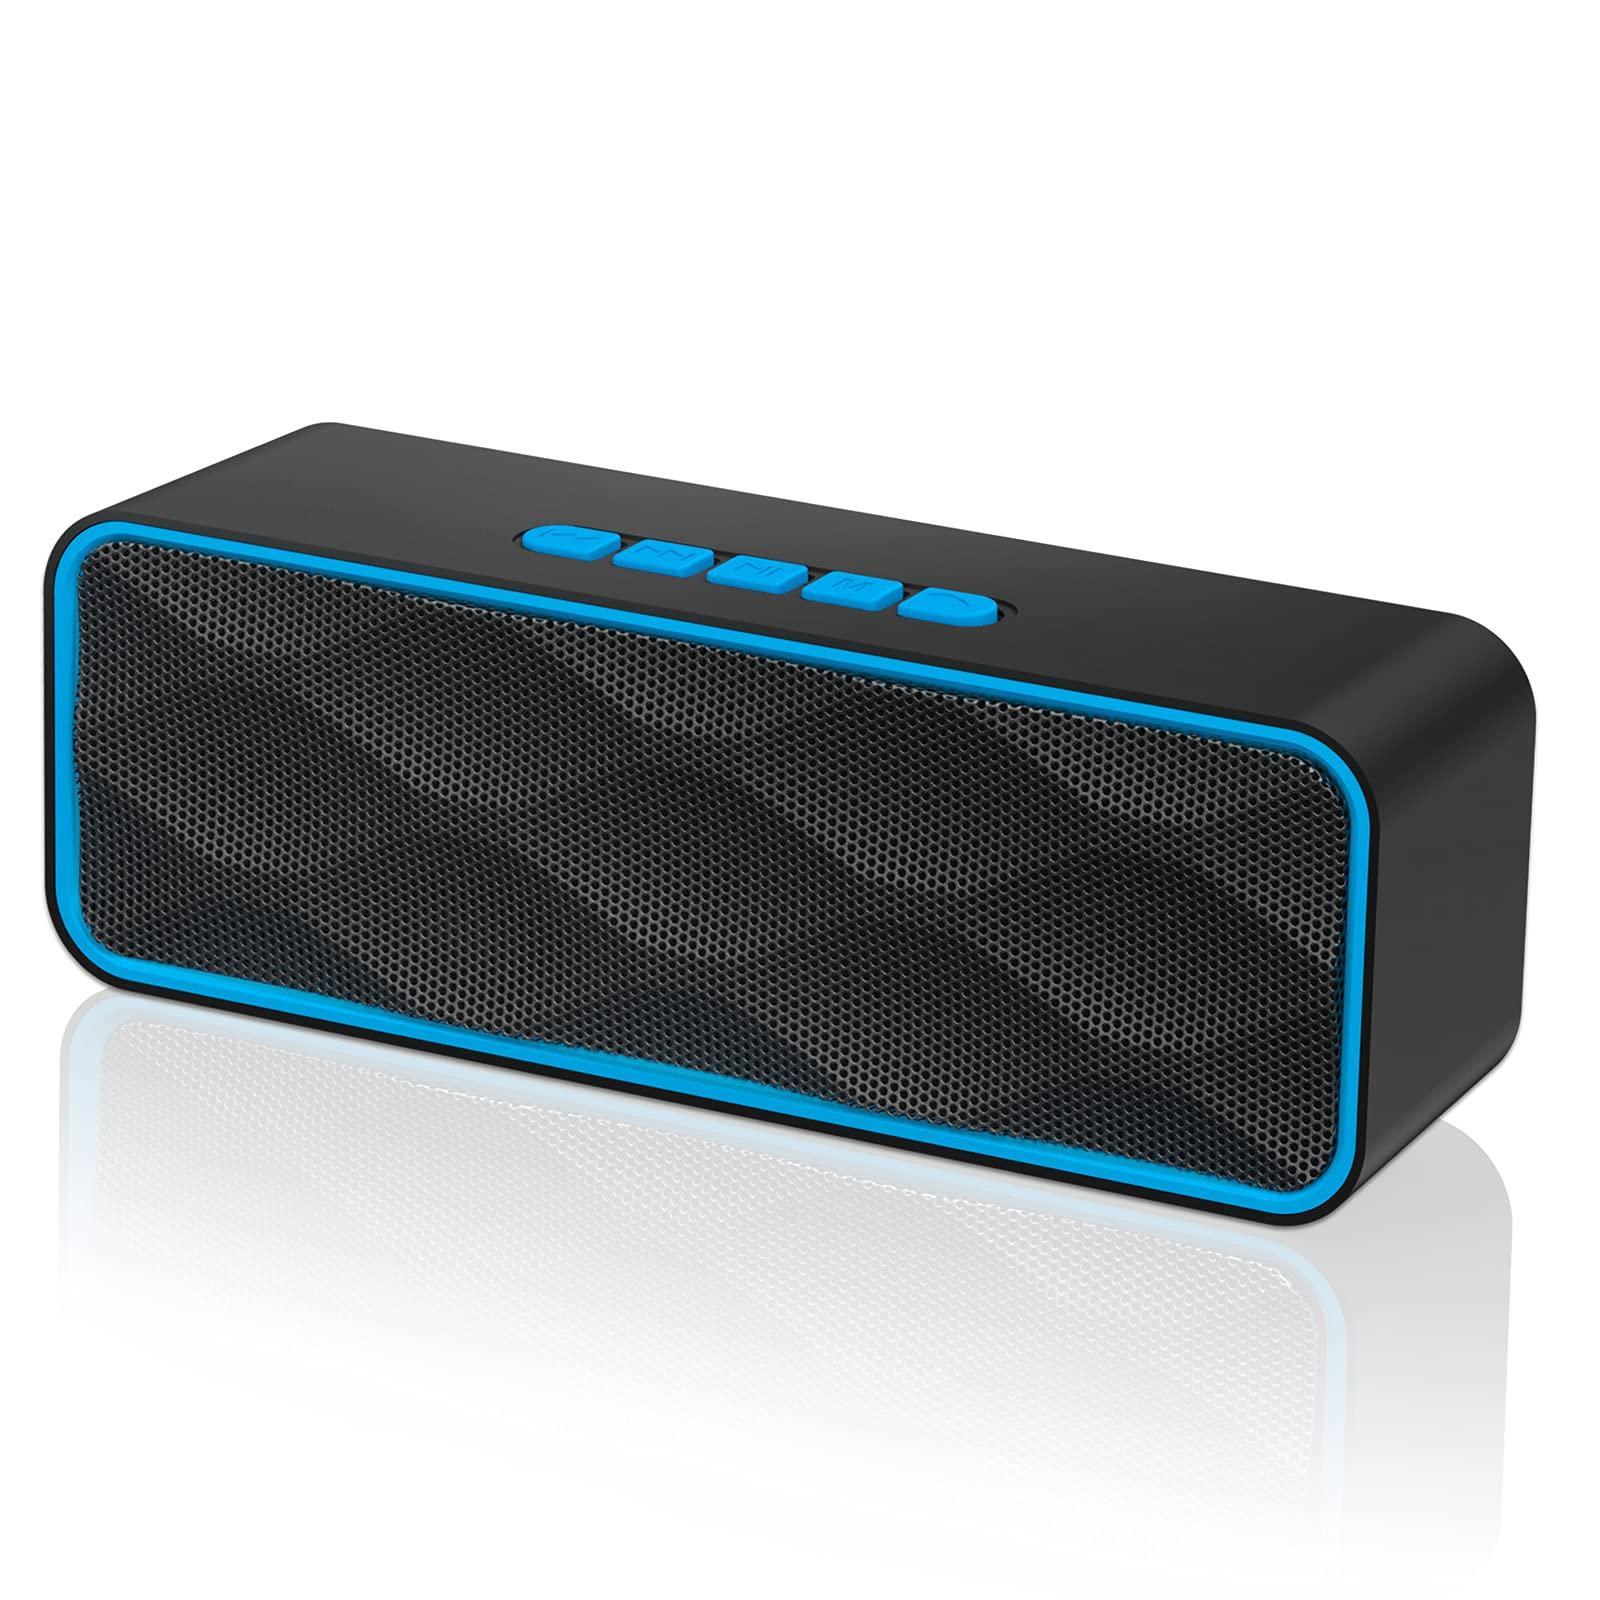 Portable Bluetooth Speaker - 5.0 Wireless Speaker with 3D Stereo